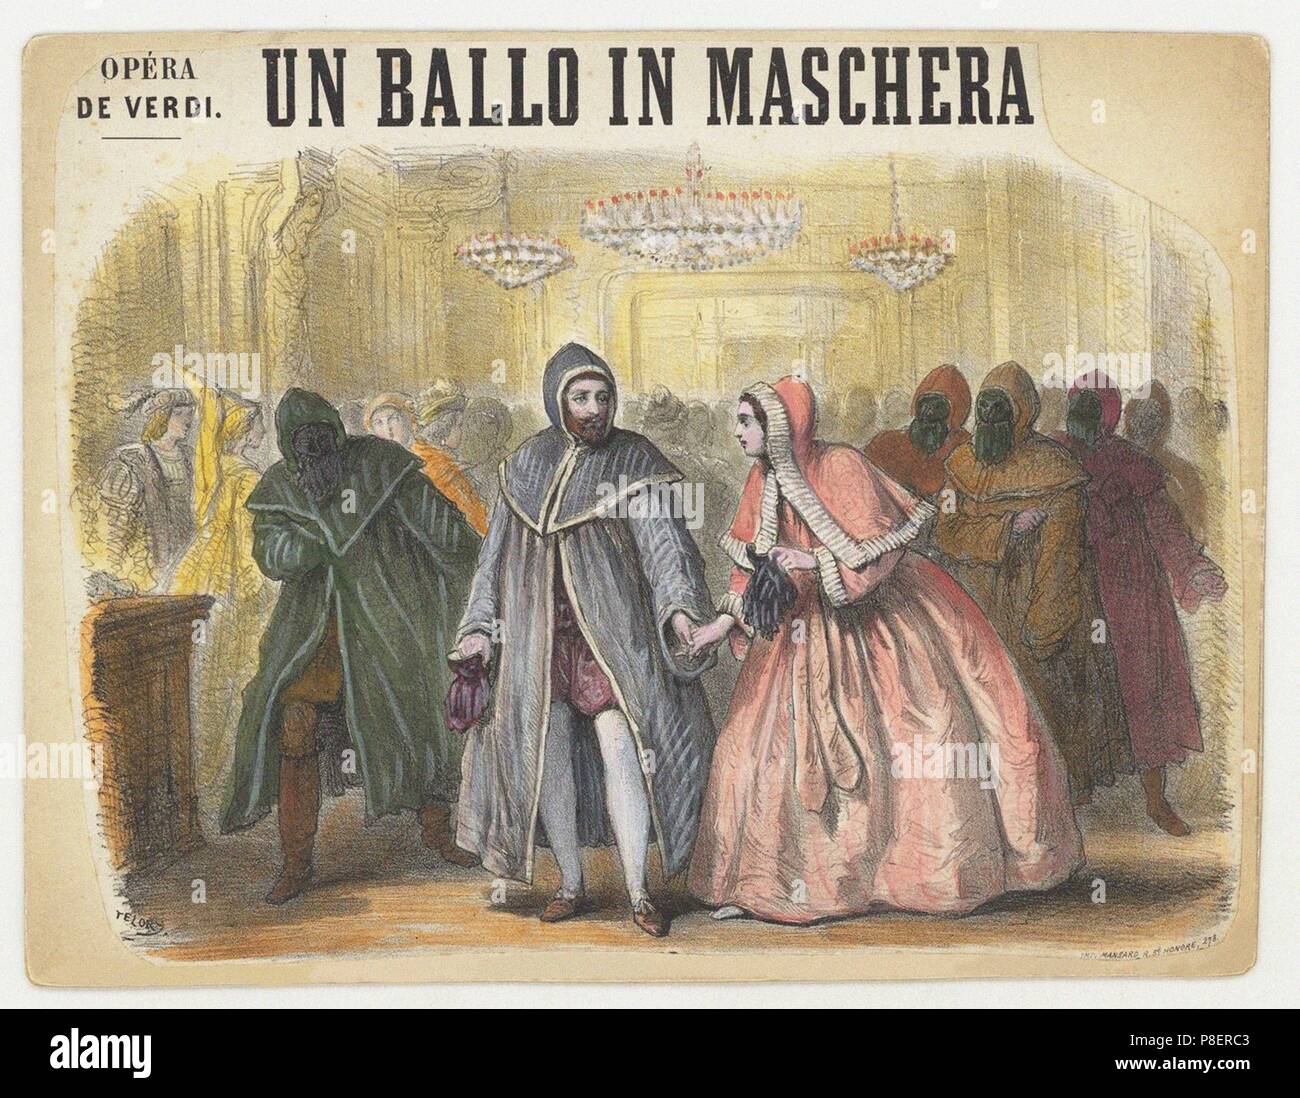 Opera Un Ballo in maschera by Giuseppe Verdi, Paris, Théâtre Italien. Museum: PRIVATE COLLECTION. Stock Photo